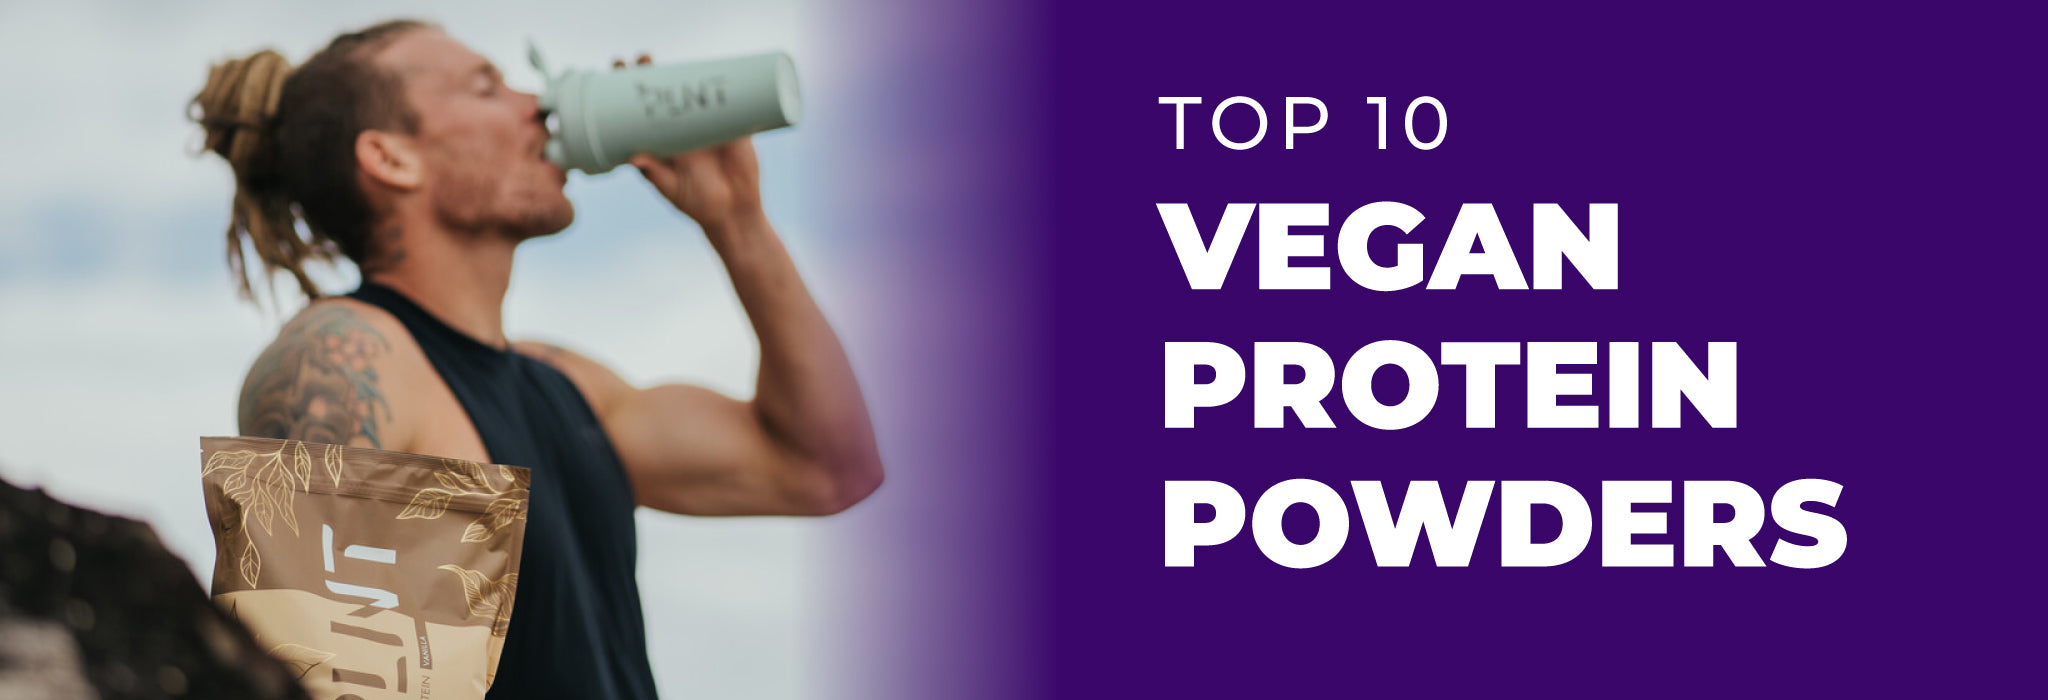 Top 10 Vegan Protein Powders